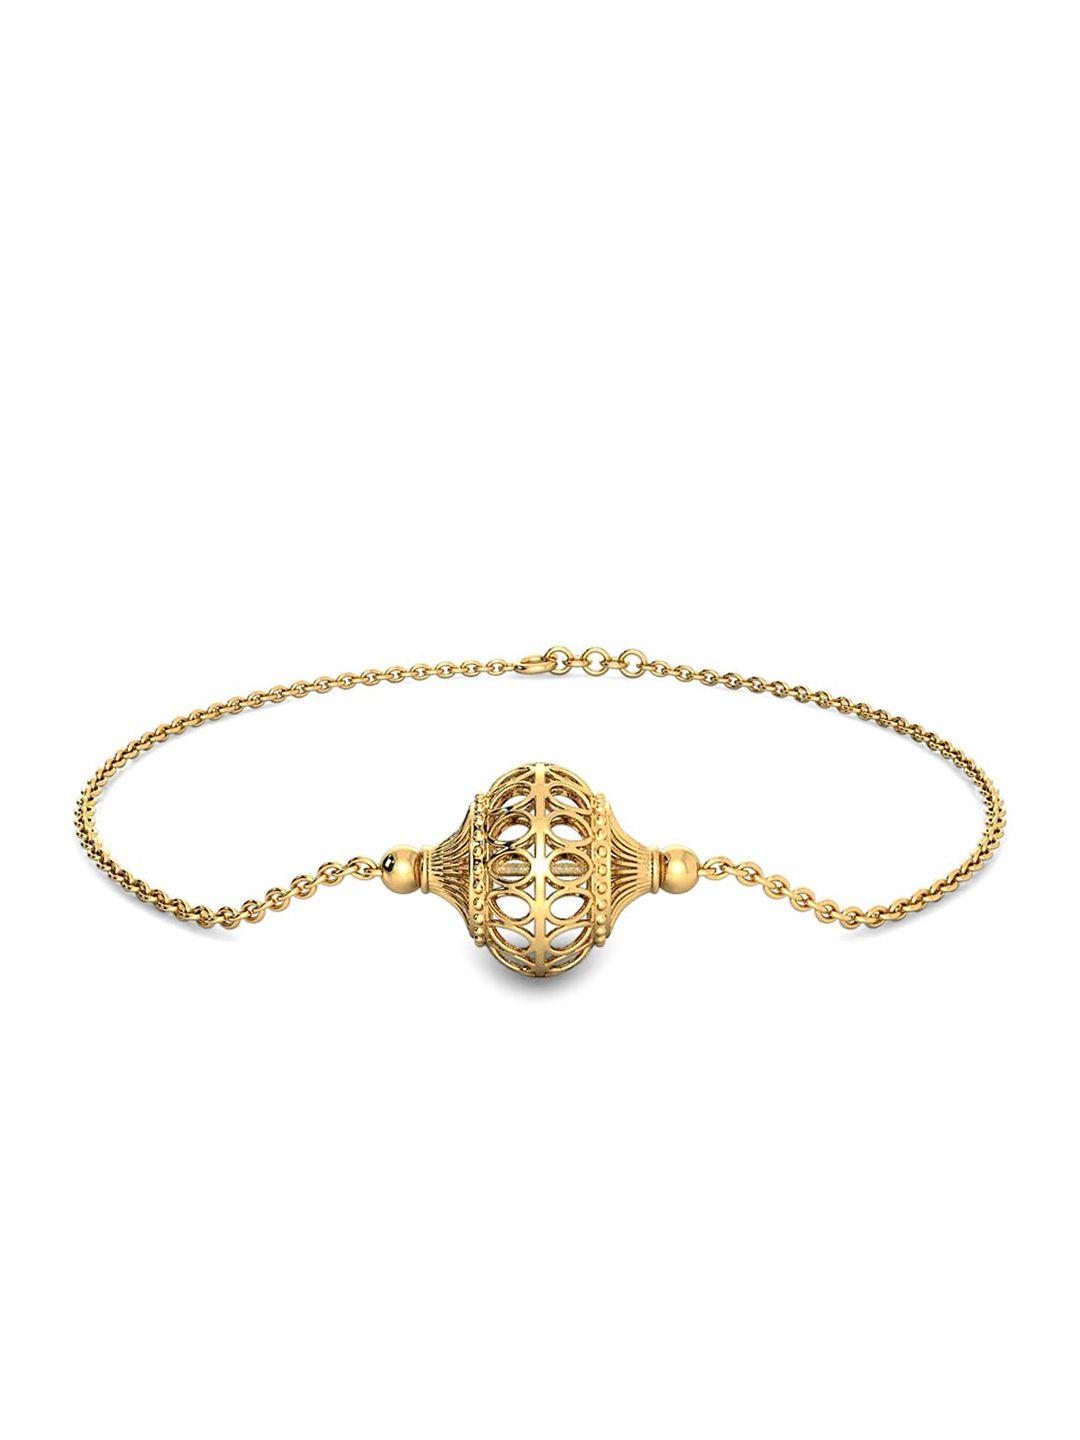 candere a kalyan jewellers company 18kt bis hallmark gold bracelet-2.15gm